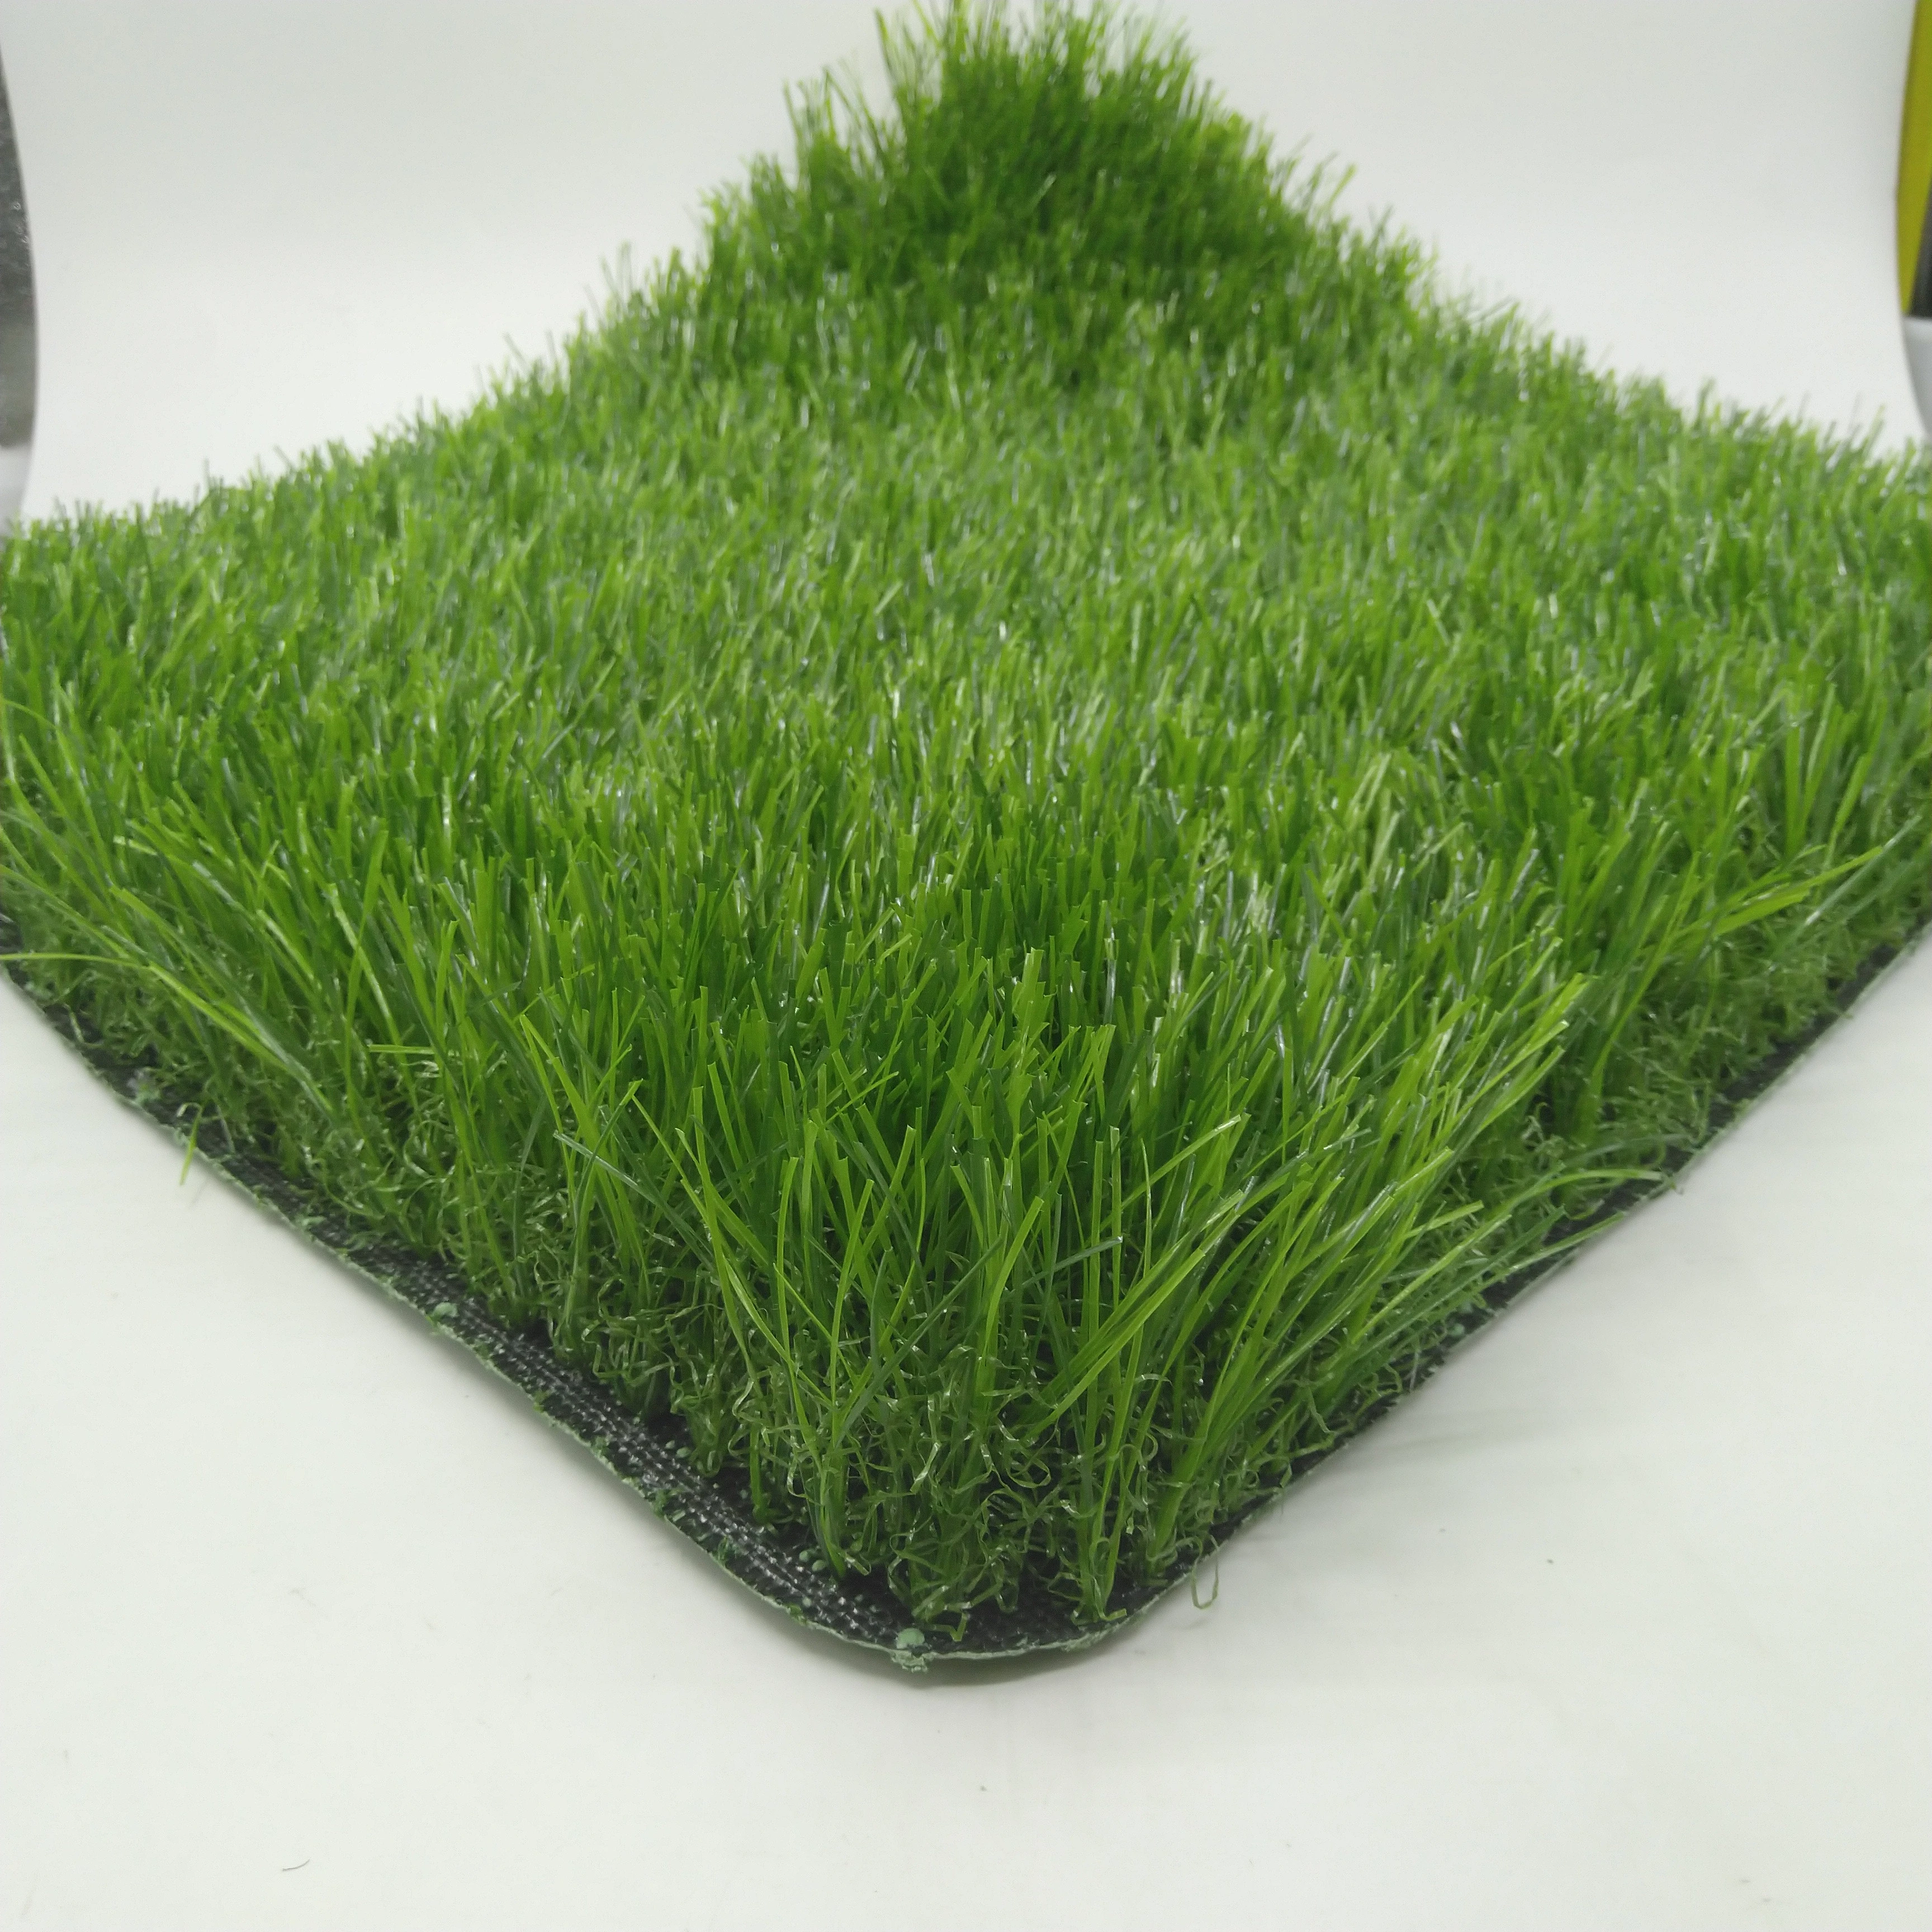 Natural Landscaping Artificial/Synthetic grass for Backyard Garden Decoration